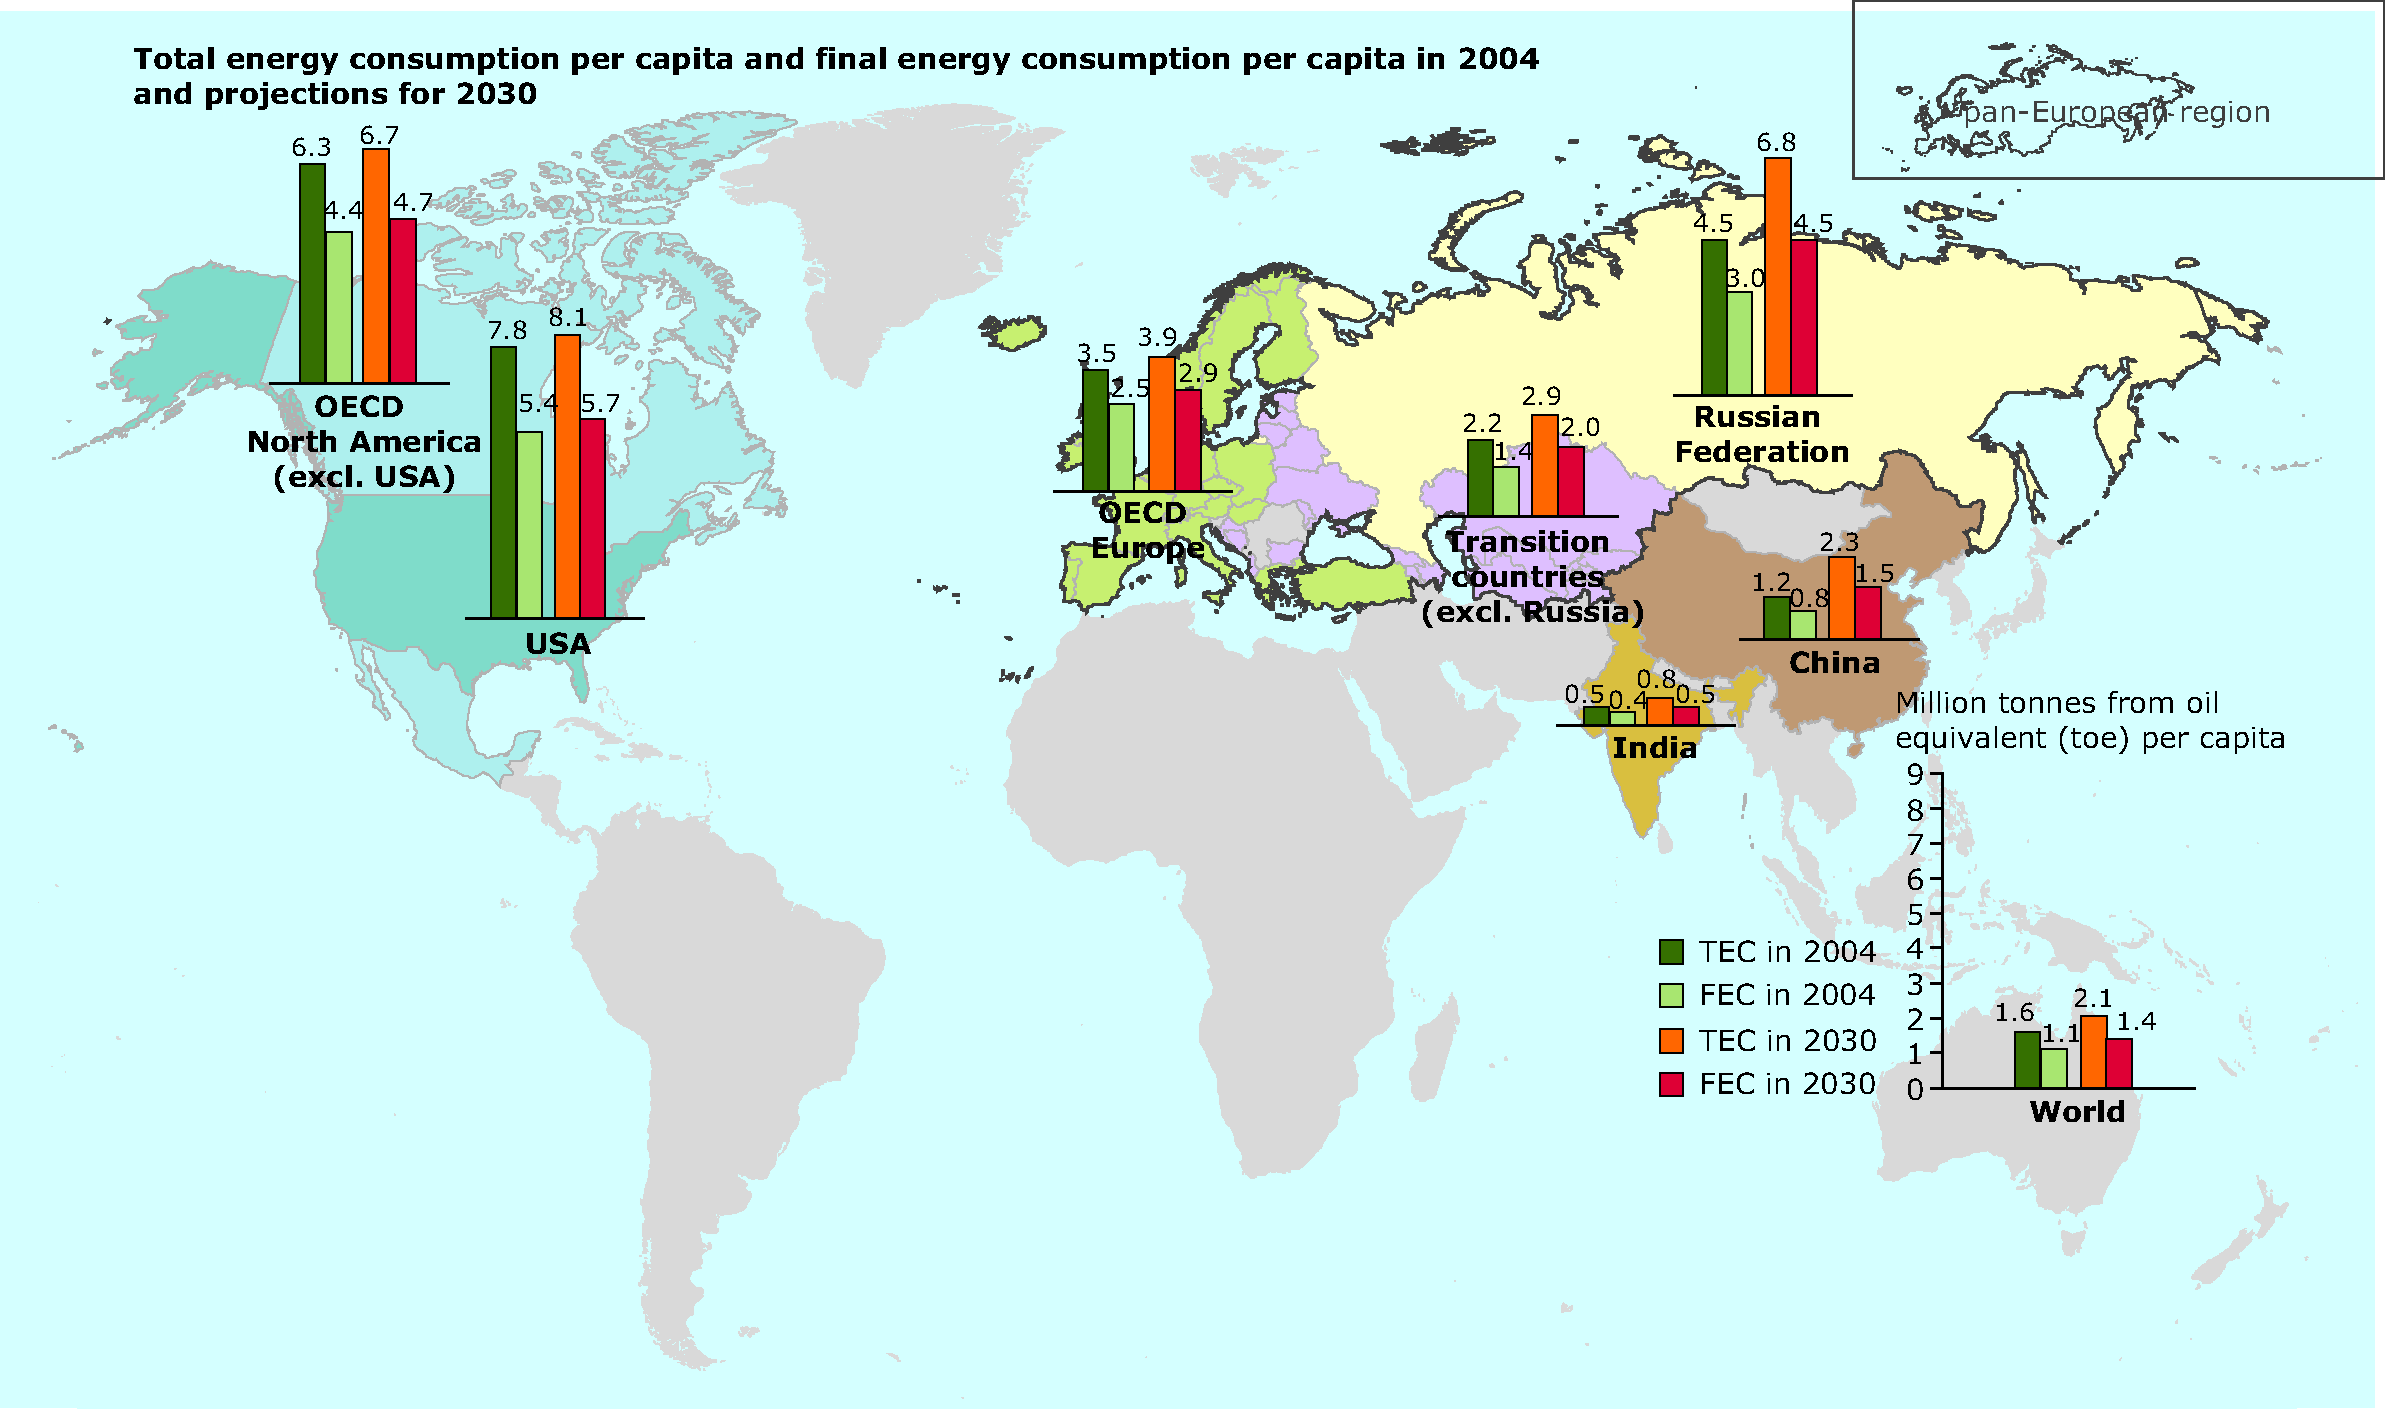 Total energy consumption per capita and final energy consumption per capita in 2004 and projections of 2030